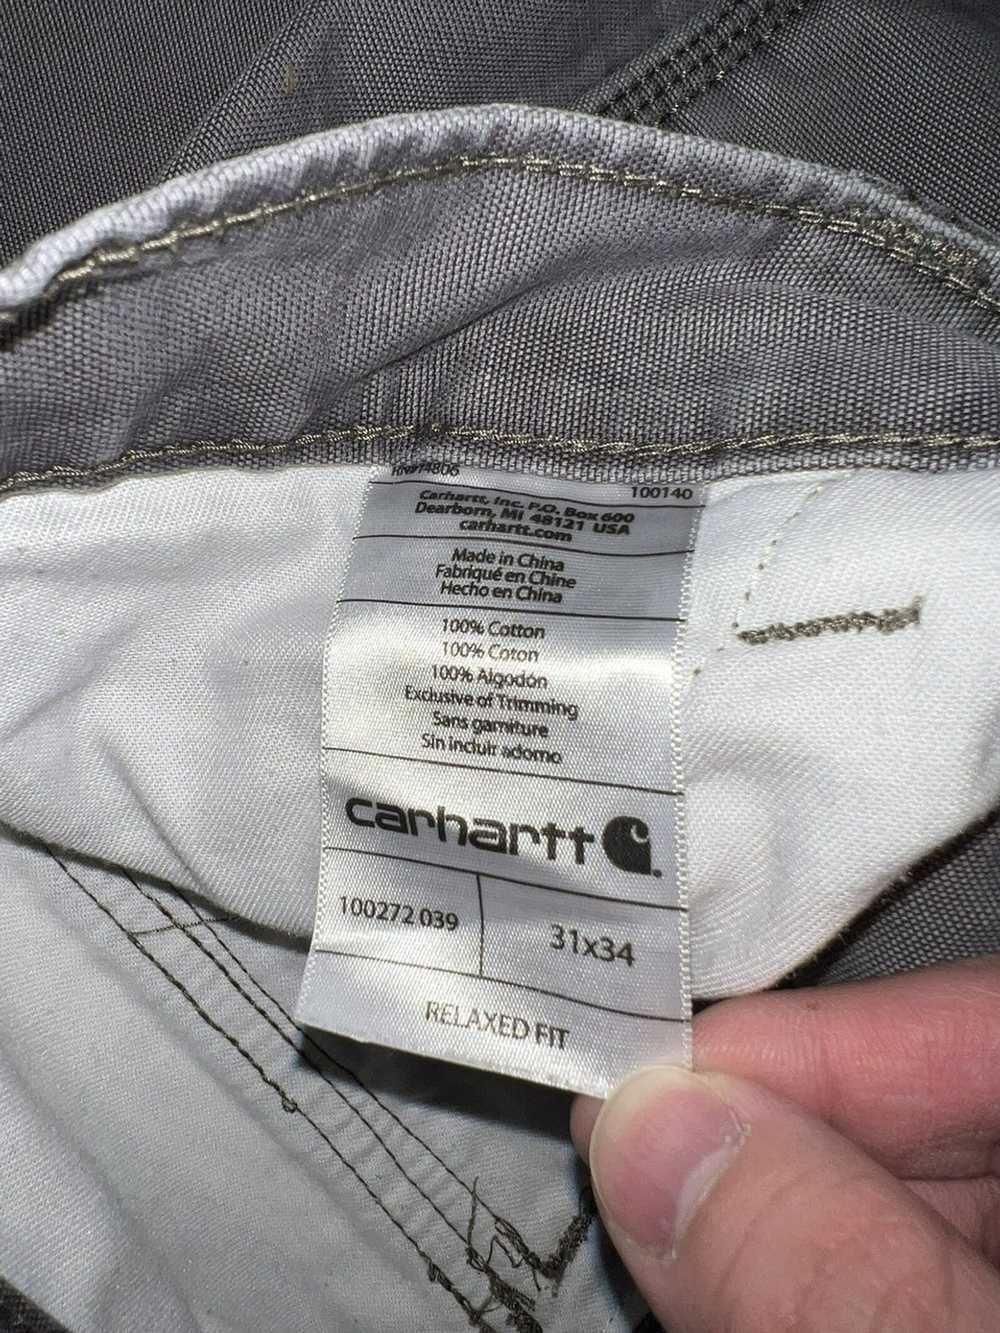 Carhartt Carhartt Cargo Pants - image 4